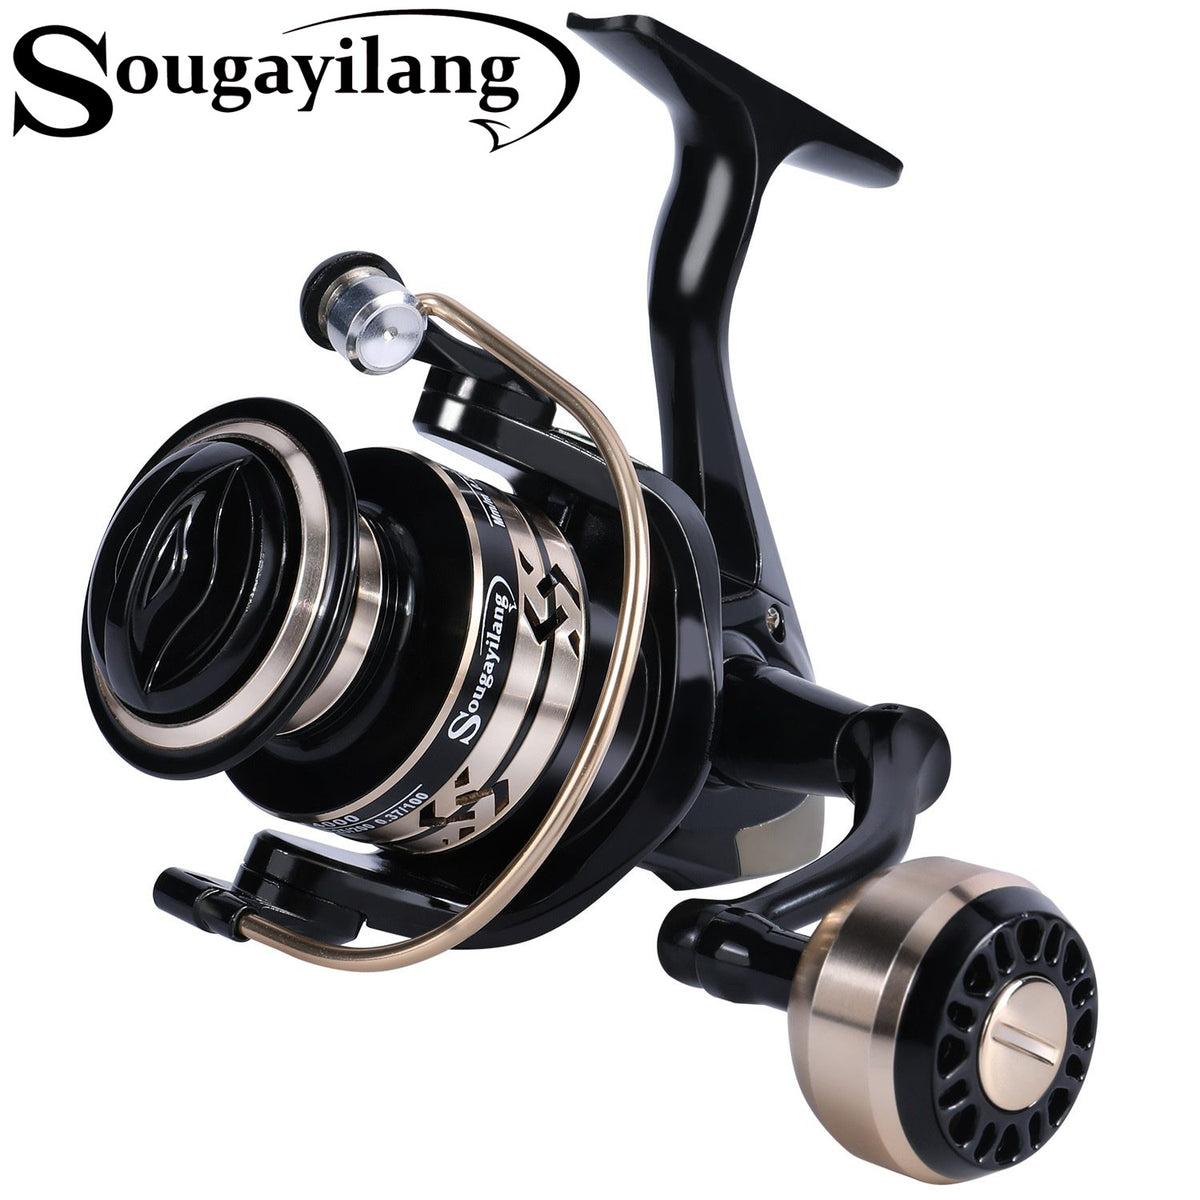 Sougayilang 5.2:1 Spinning Fishing Reel High Strength Cast Alloy Driv